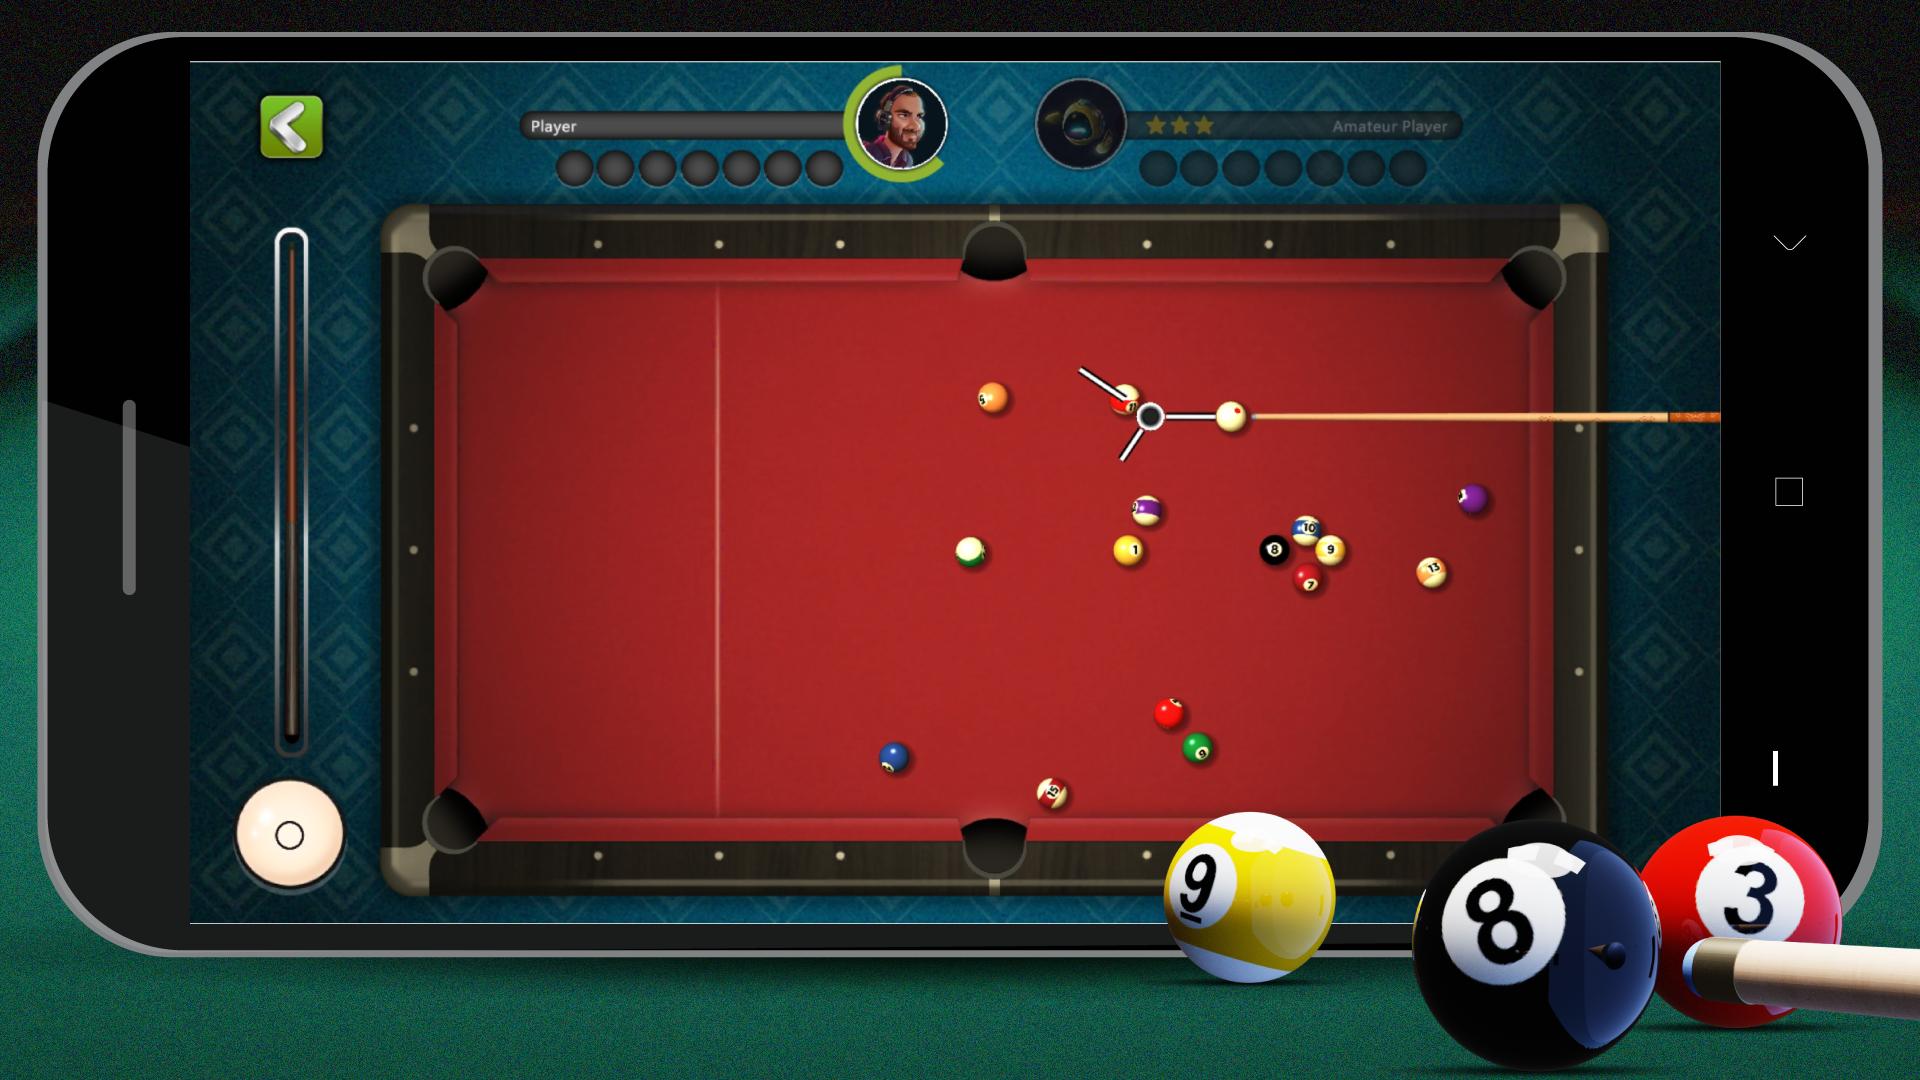 8 Ball Billiards- Offline Free Pool Game 1.51 Screenshot 13